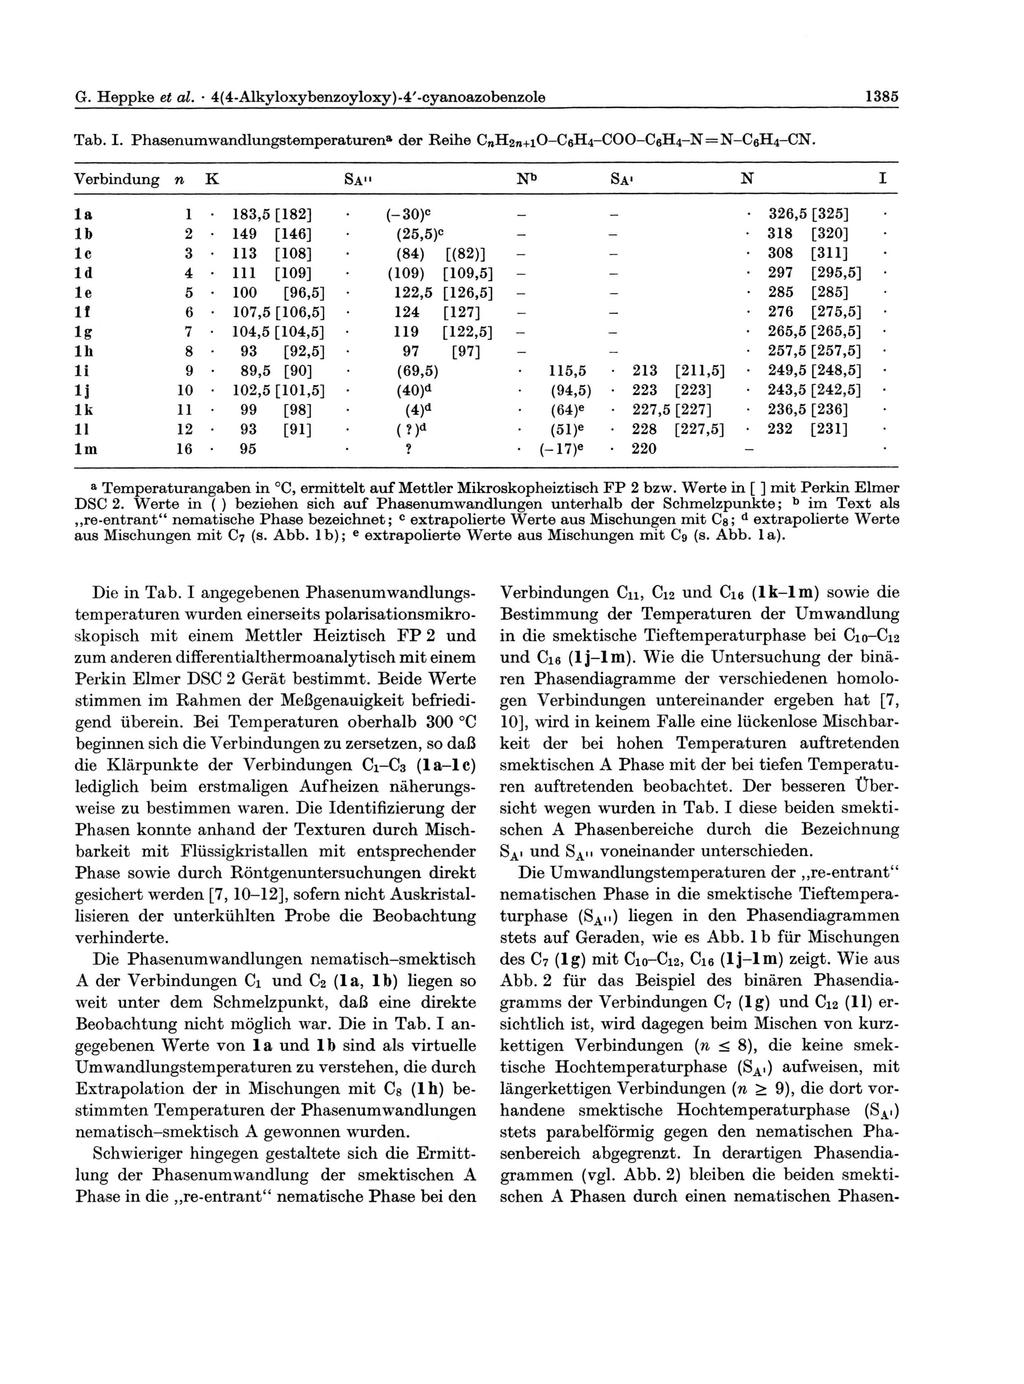 1385 G. Heppke et al. 4-Alkyloxybenzoyloxye Tab. I. Phasenumwandlungstemperaturen a der Reihe CnH^n+iO-CeH^-COO-CeH/i-N = N - C 6 H 4 - C N.